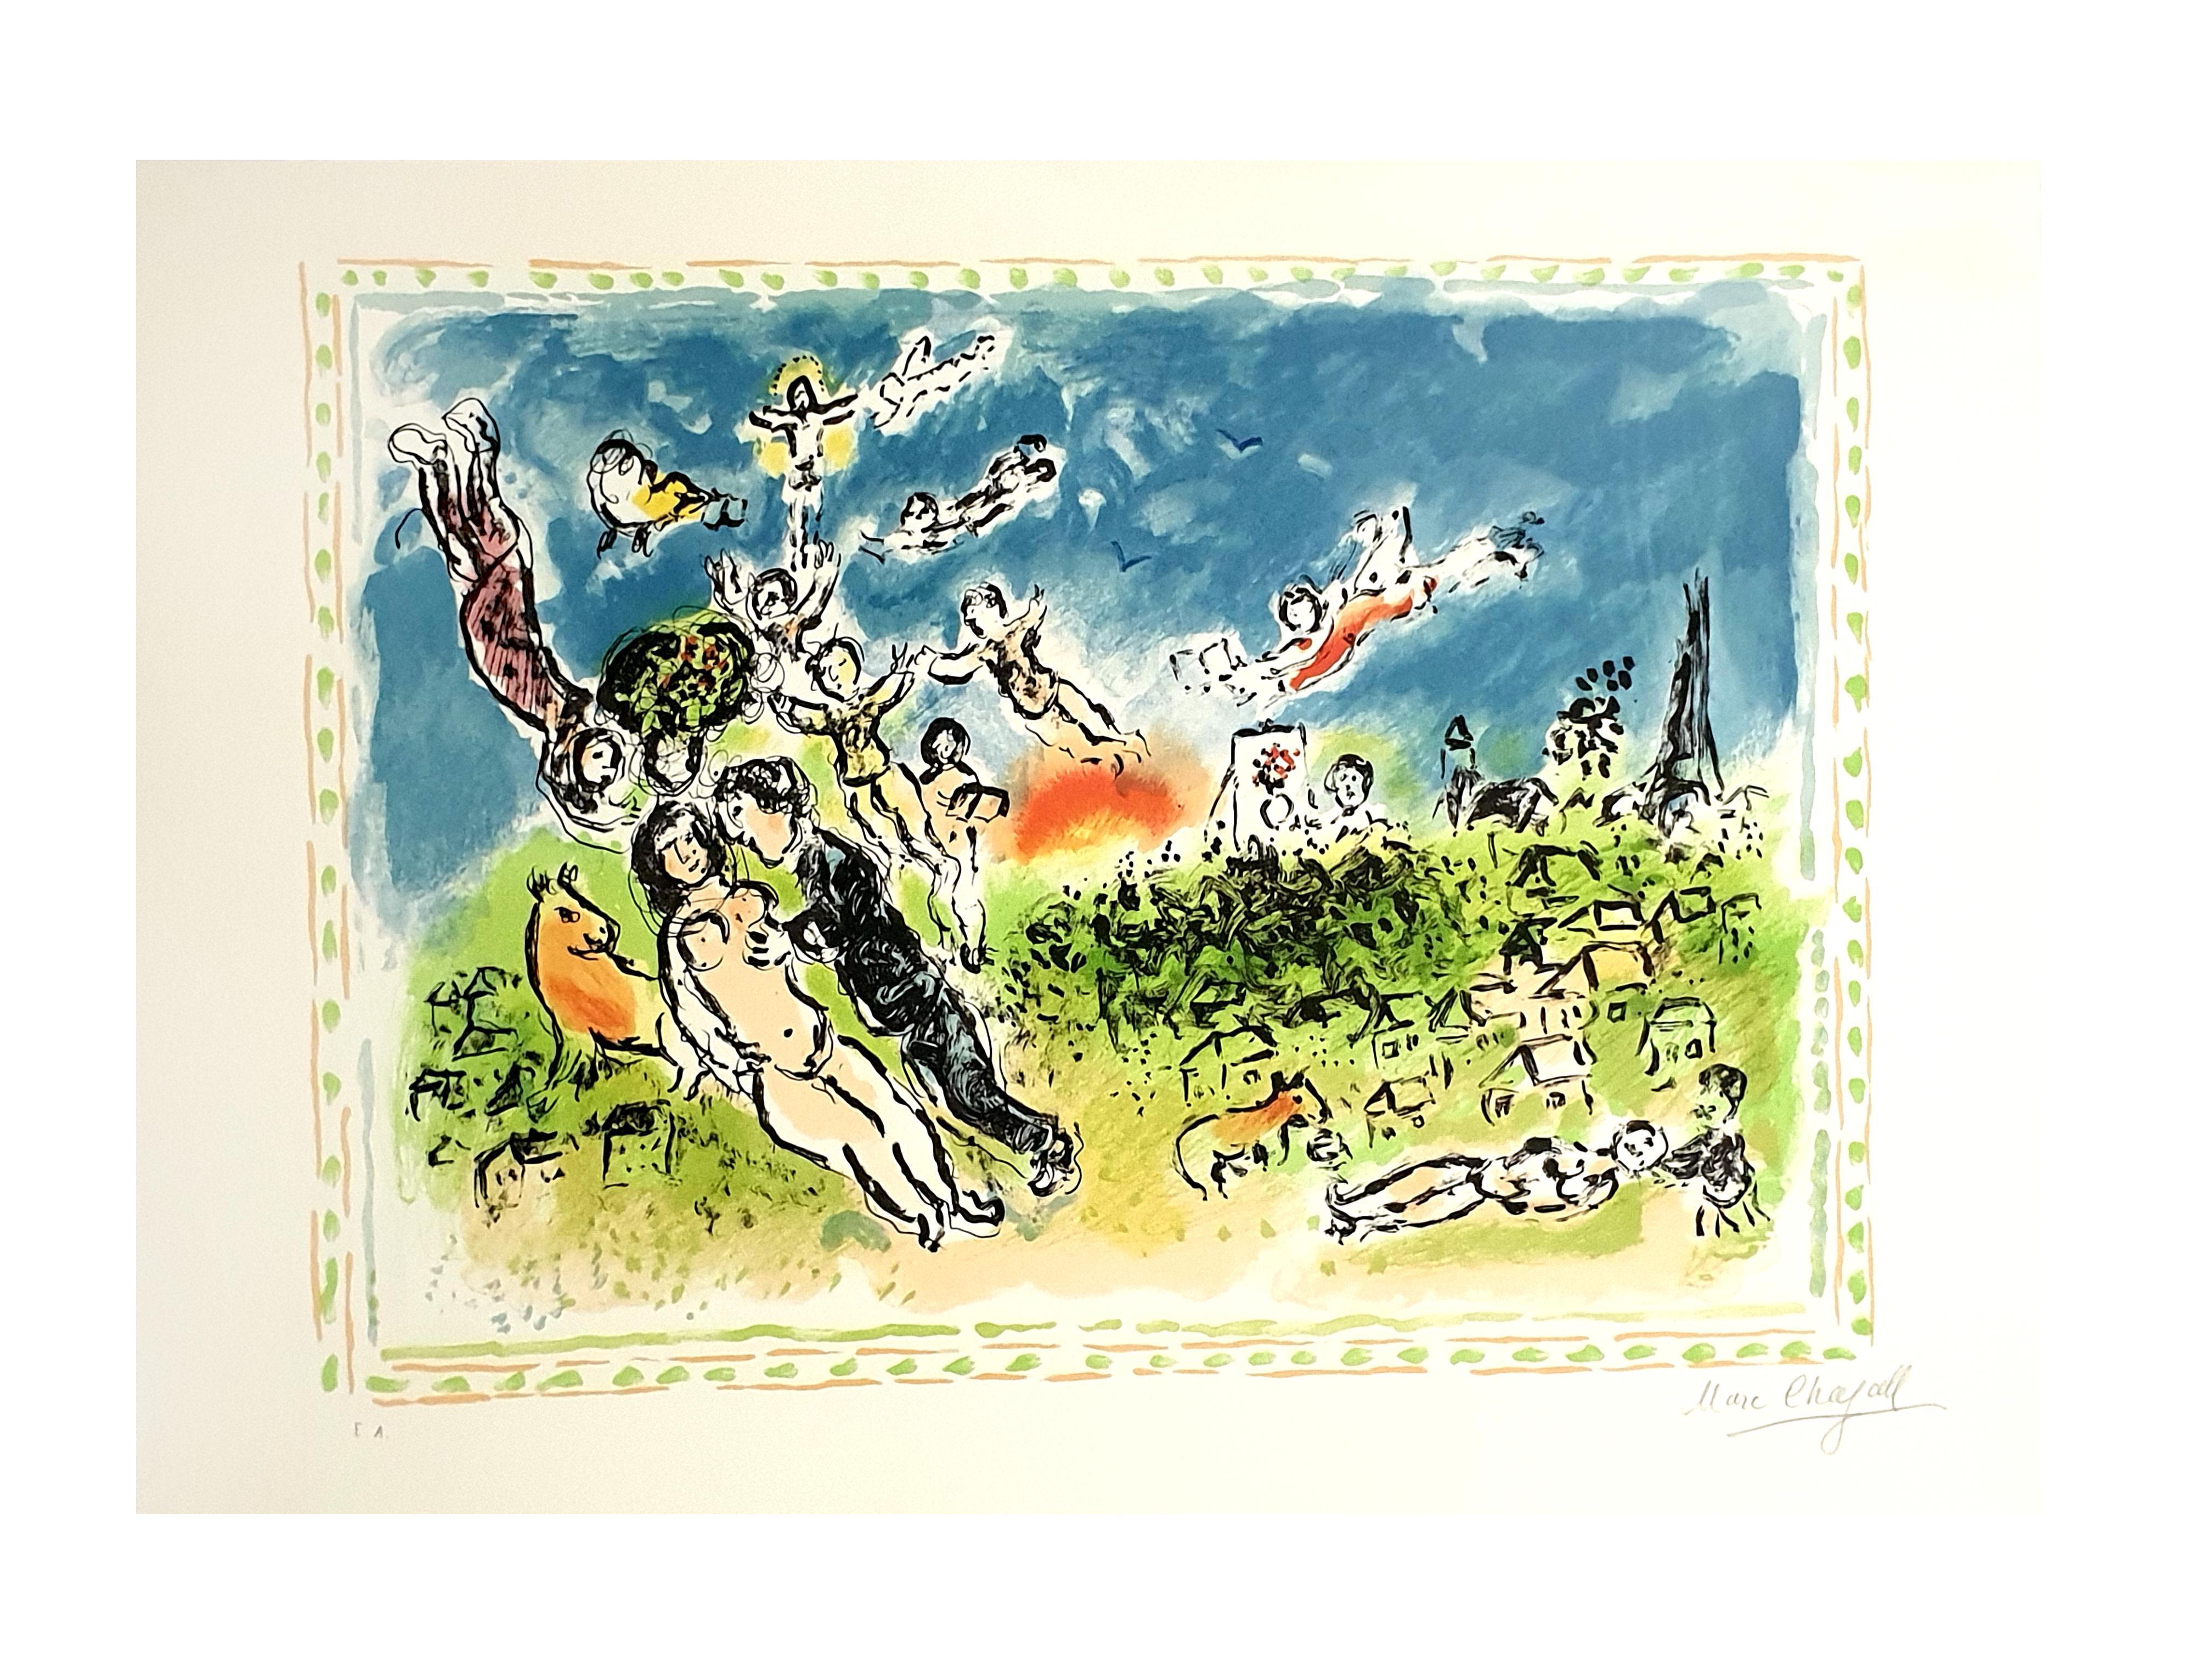 Marc Chagall - Summer's Dream - Original Handsigned Lithograph